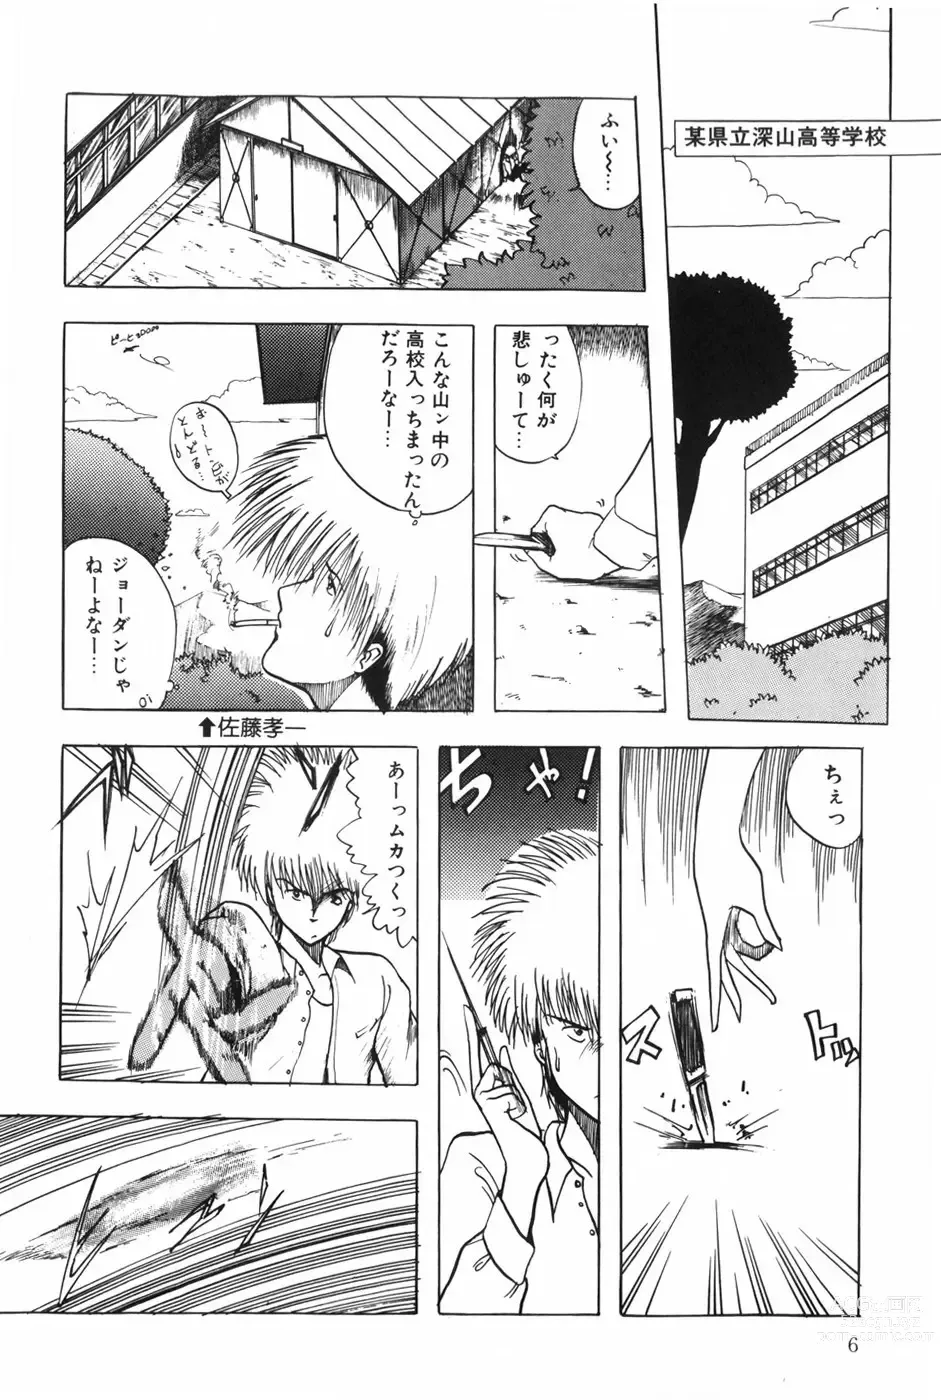 Page 12 of manga POSSESSION